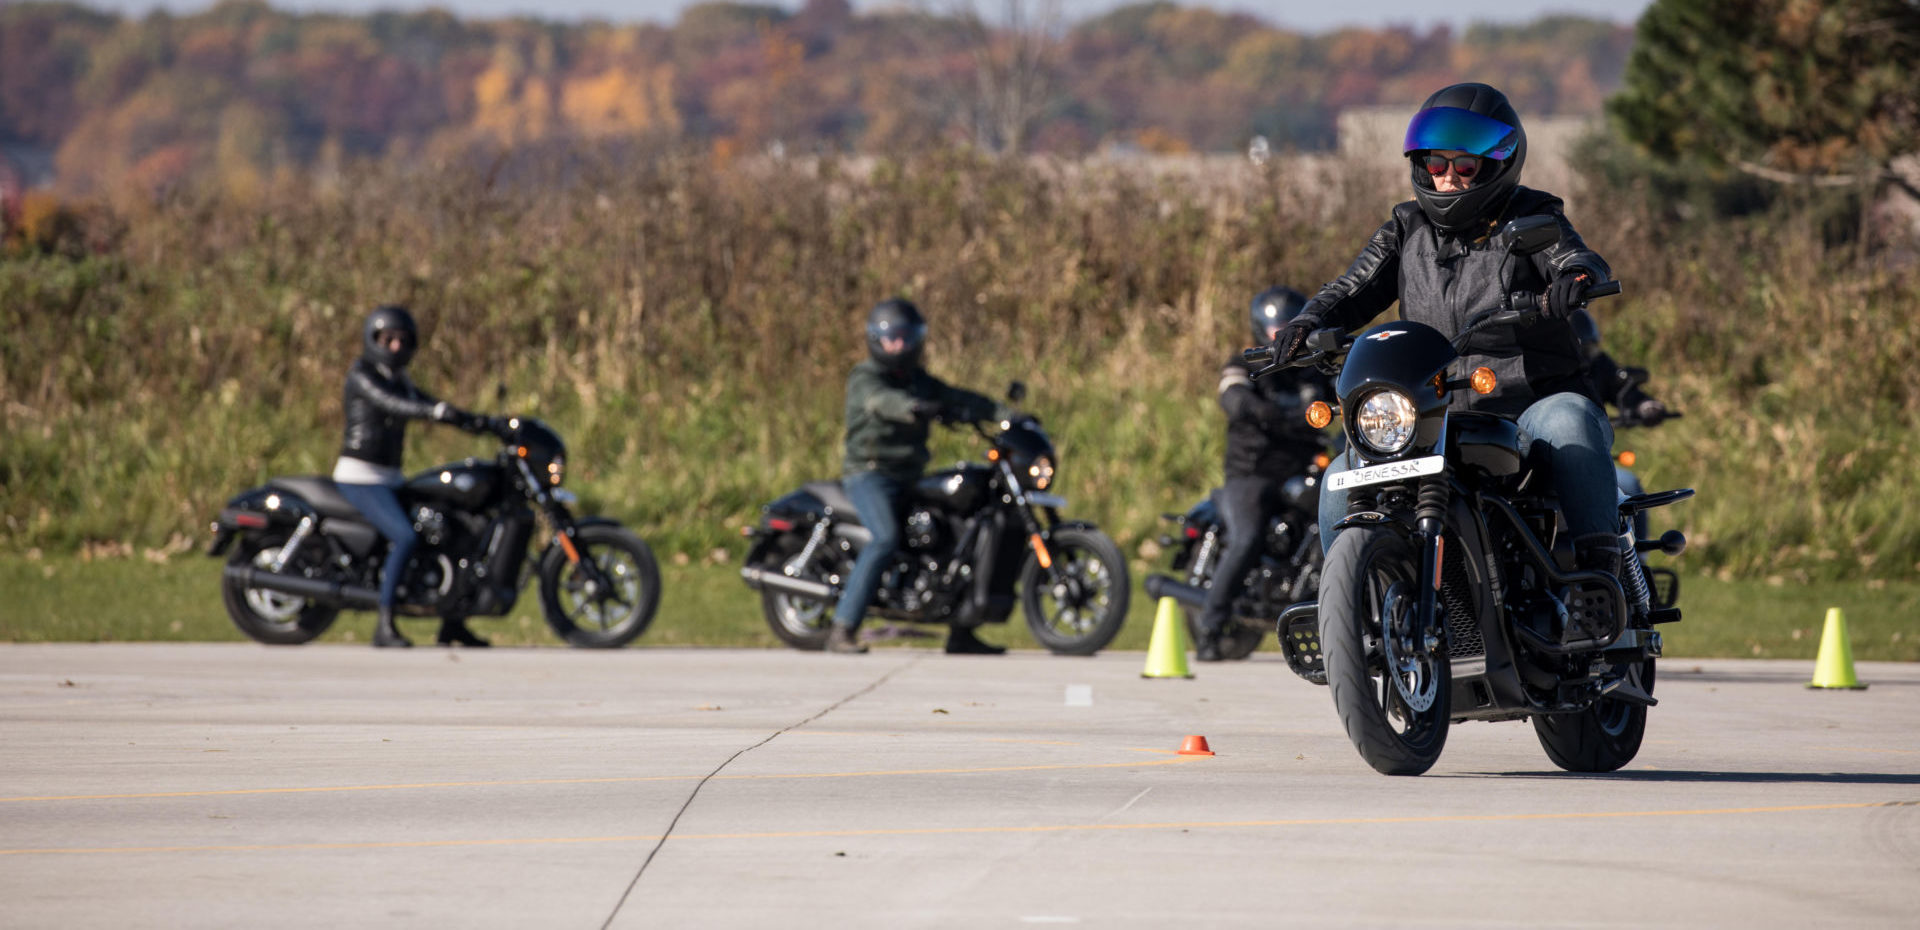 A scene from a Harley-Davidson Riding Academy. Photo courtesy Harley-Davidson.